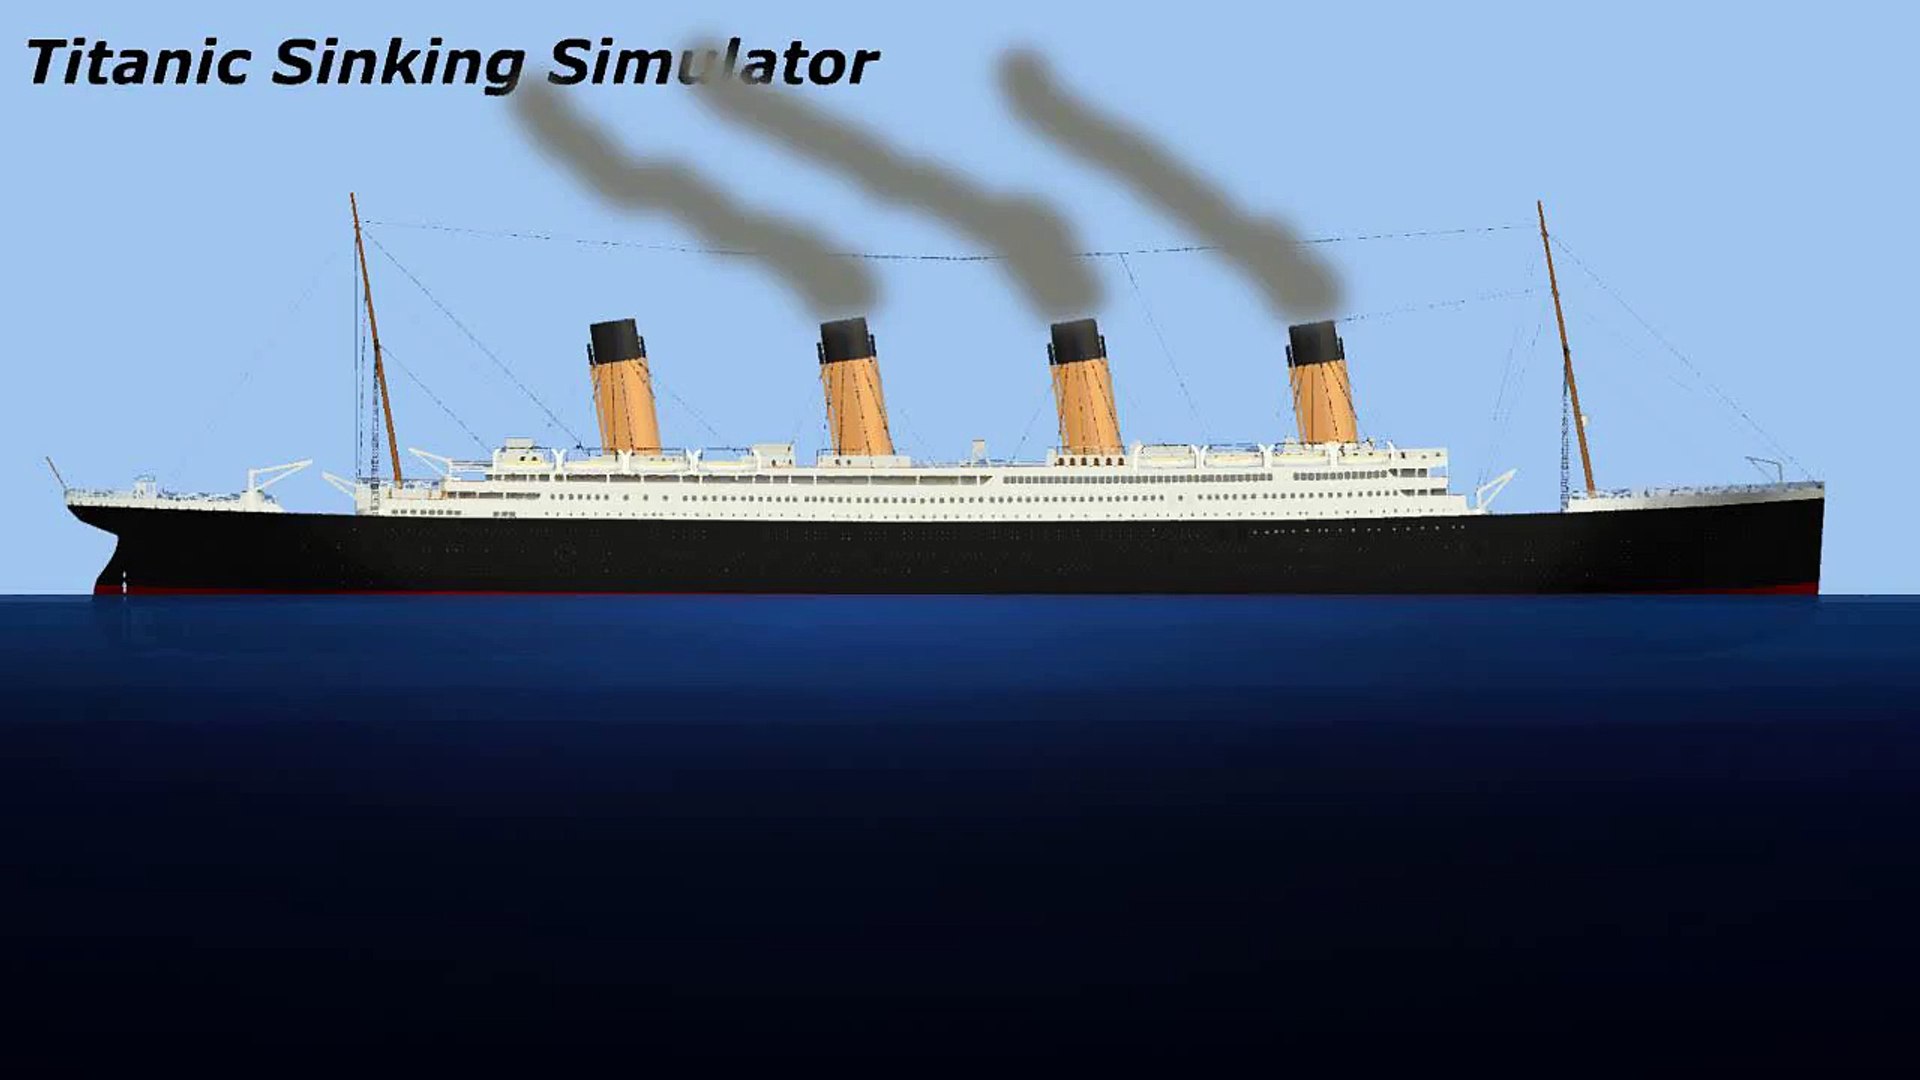 Titanic Sinking Simulator (Flash Game) - video Dailymotion